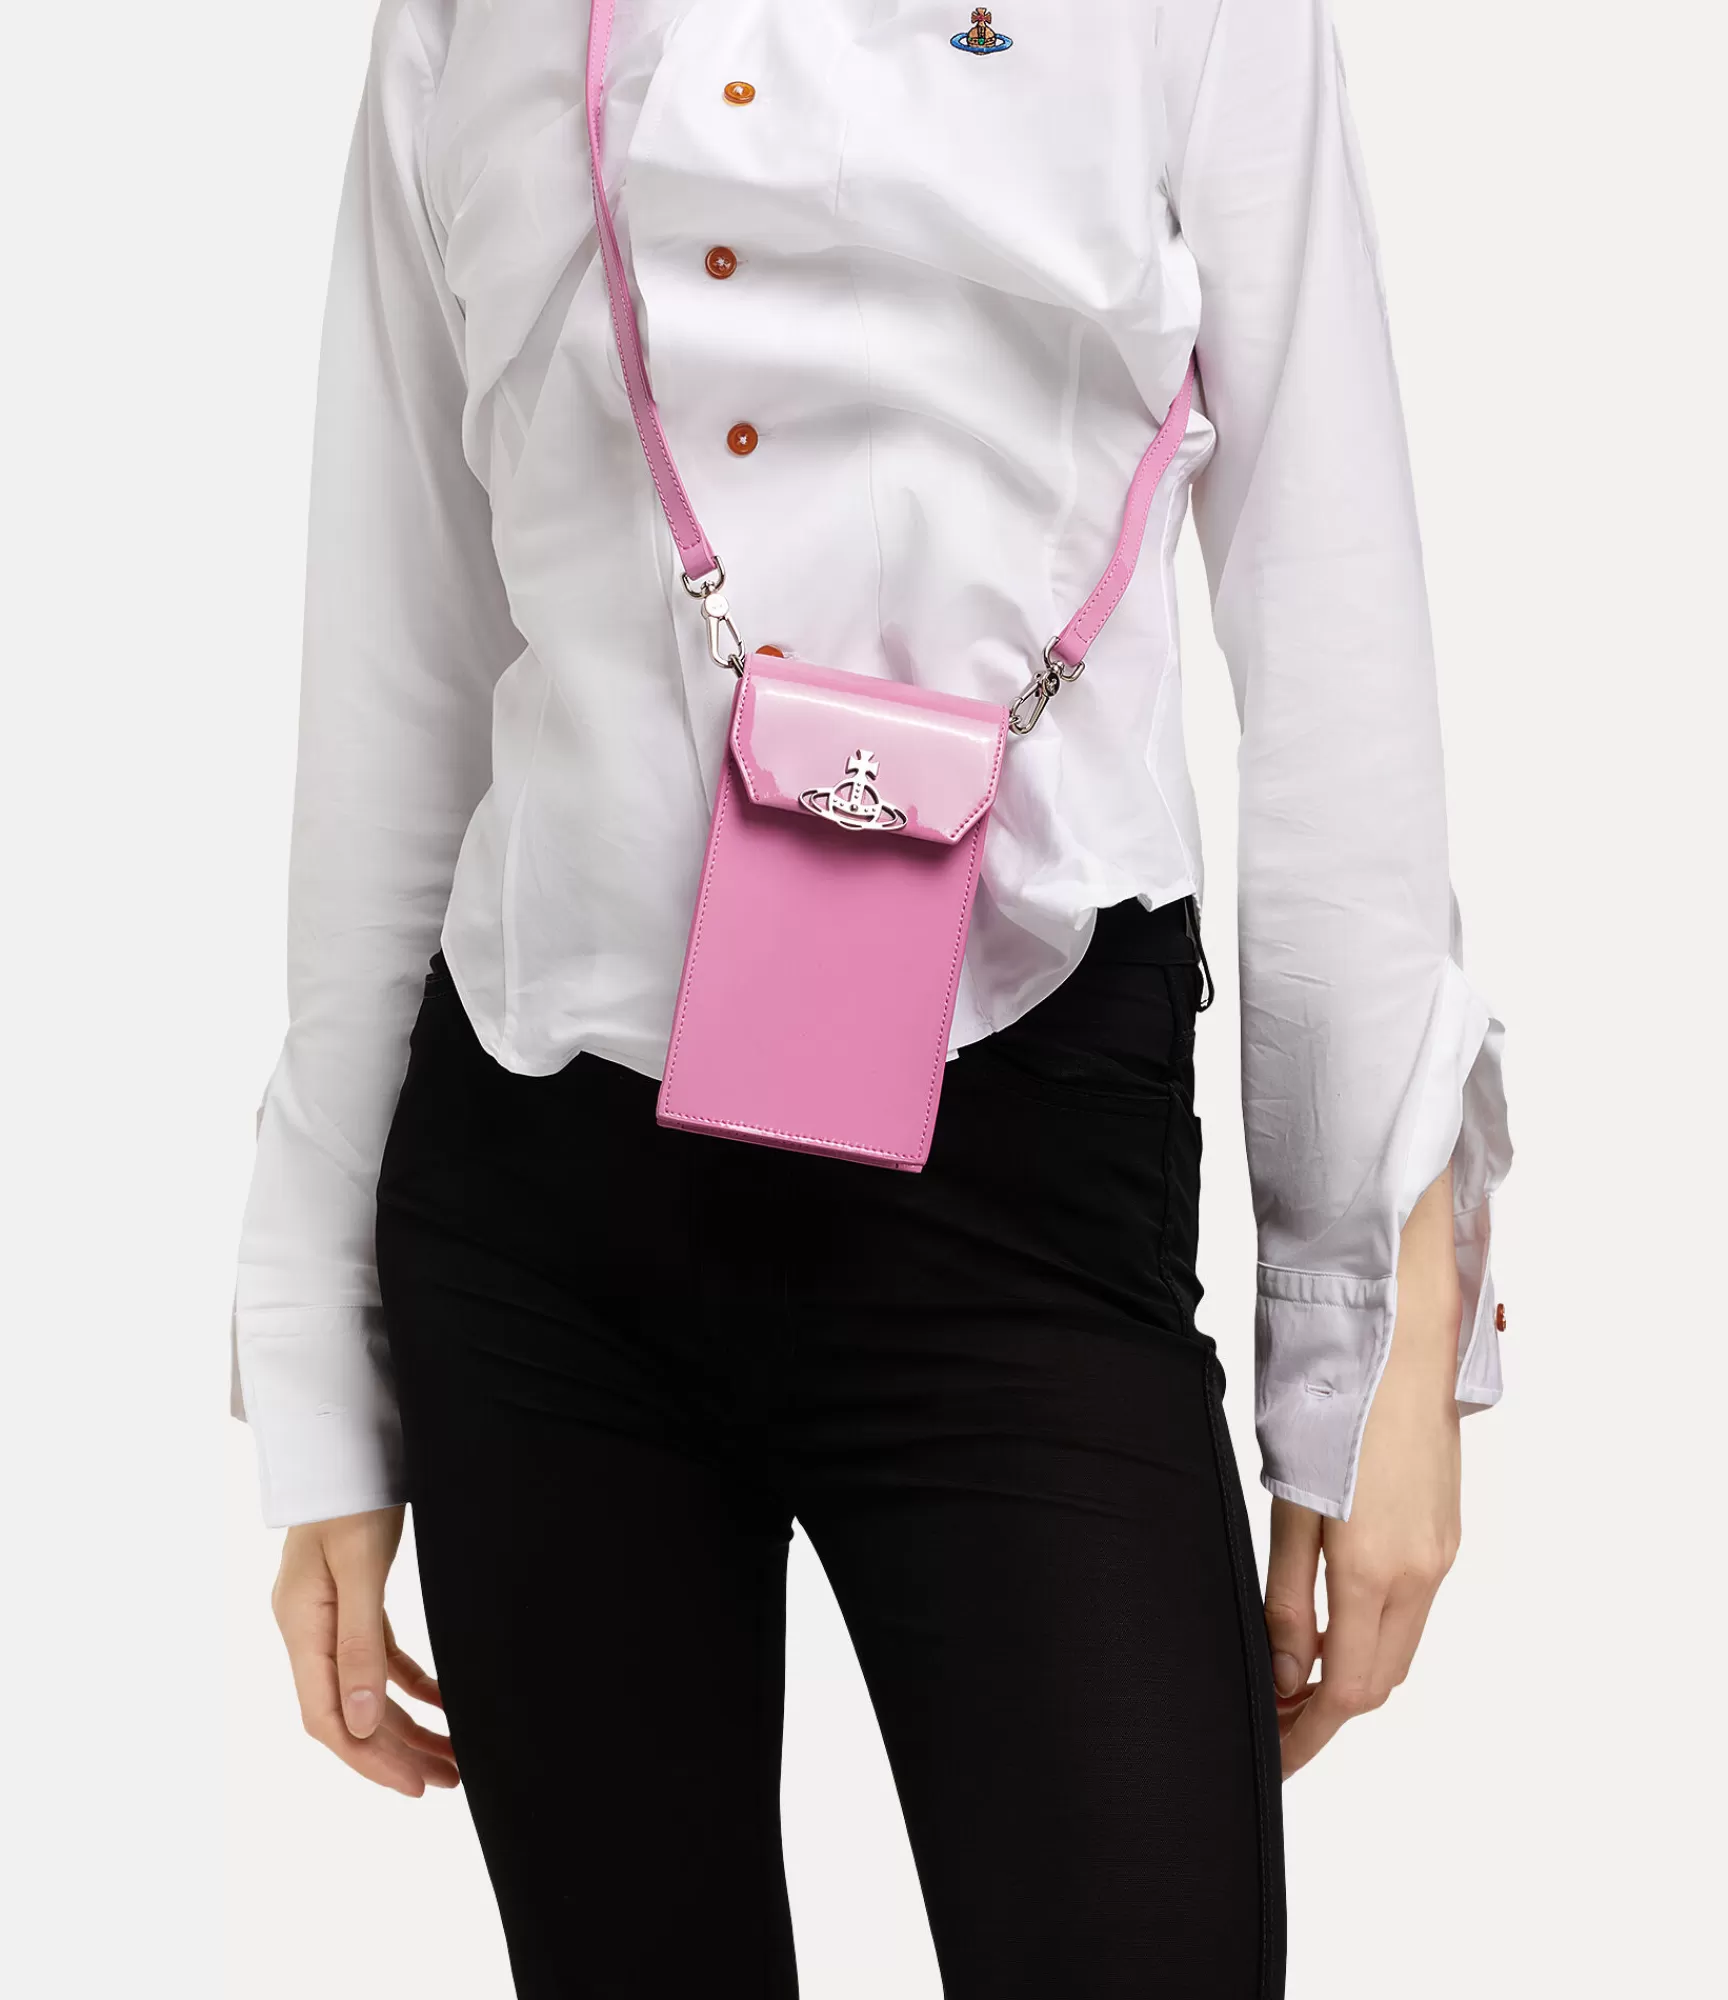 Vivienne Westwood Other Accessories*Phone bag Pink